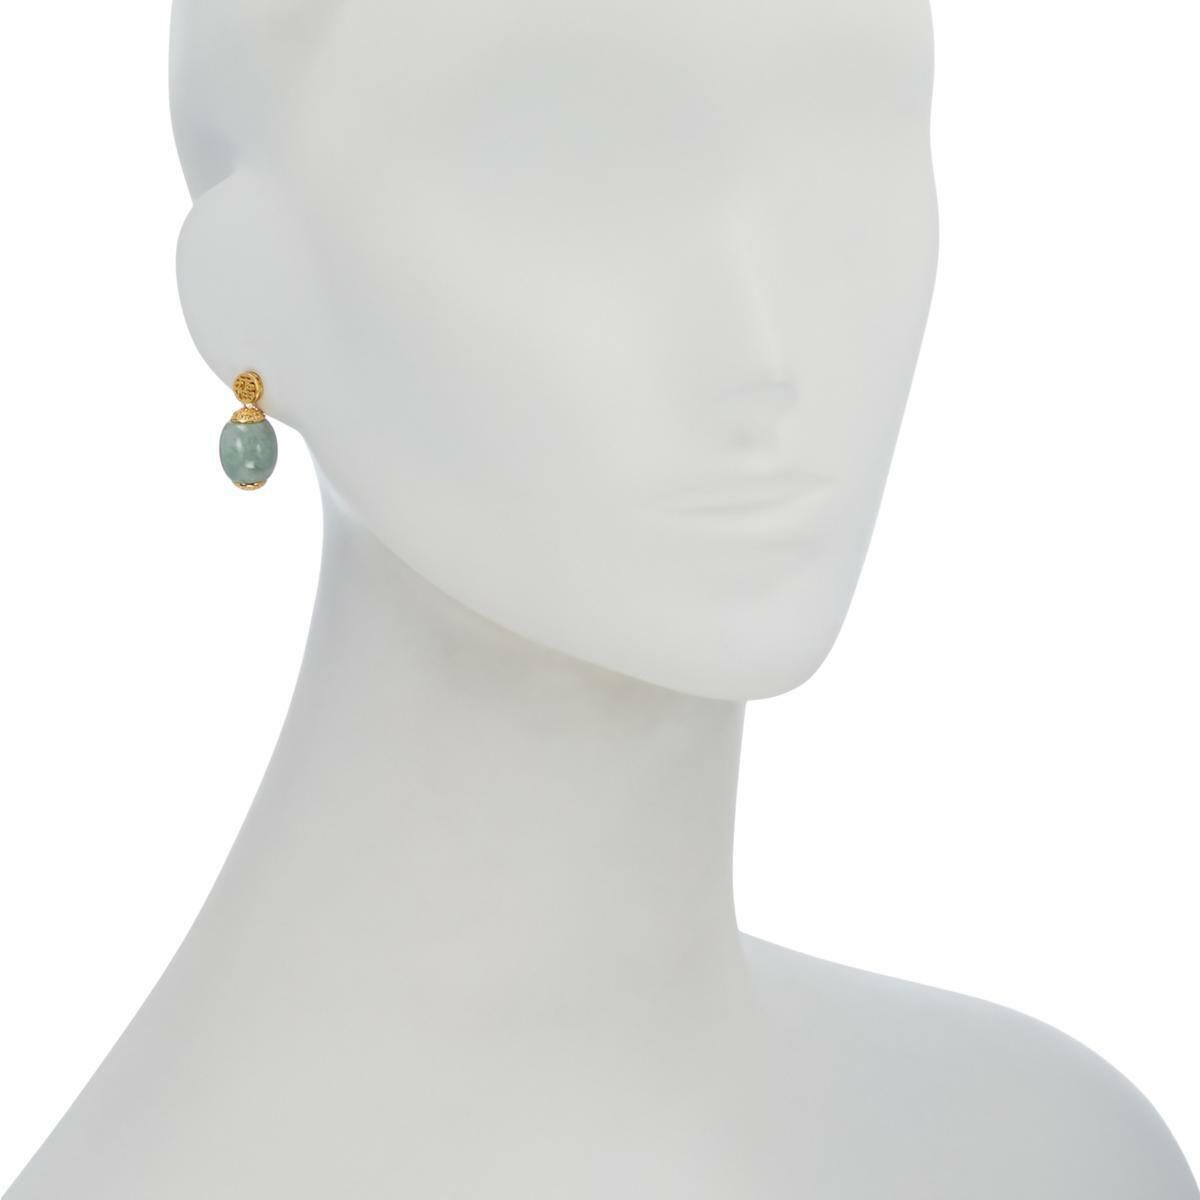 Jade of Yesteryear "Glamorous" Gold-Plated Nephrite Jade Barrel Drop Earrings